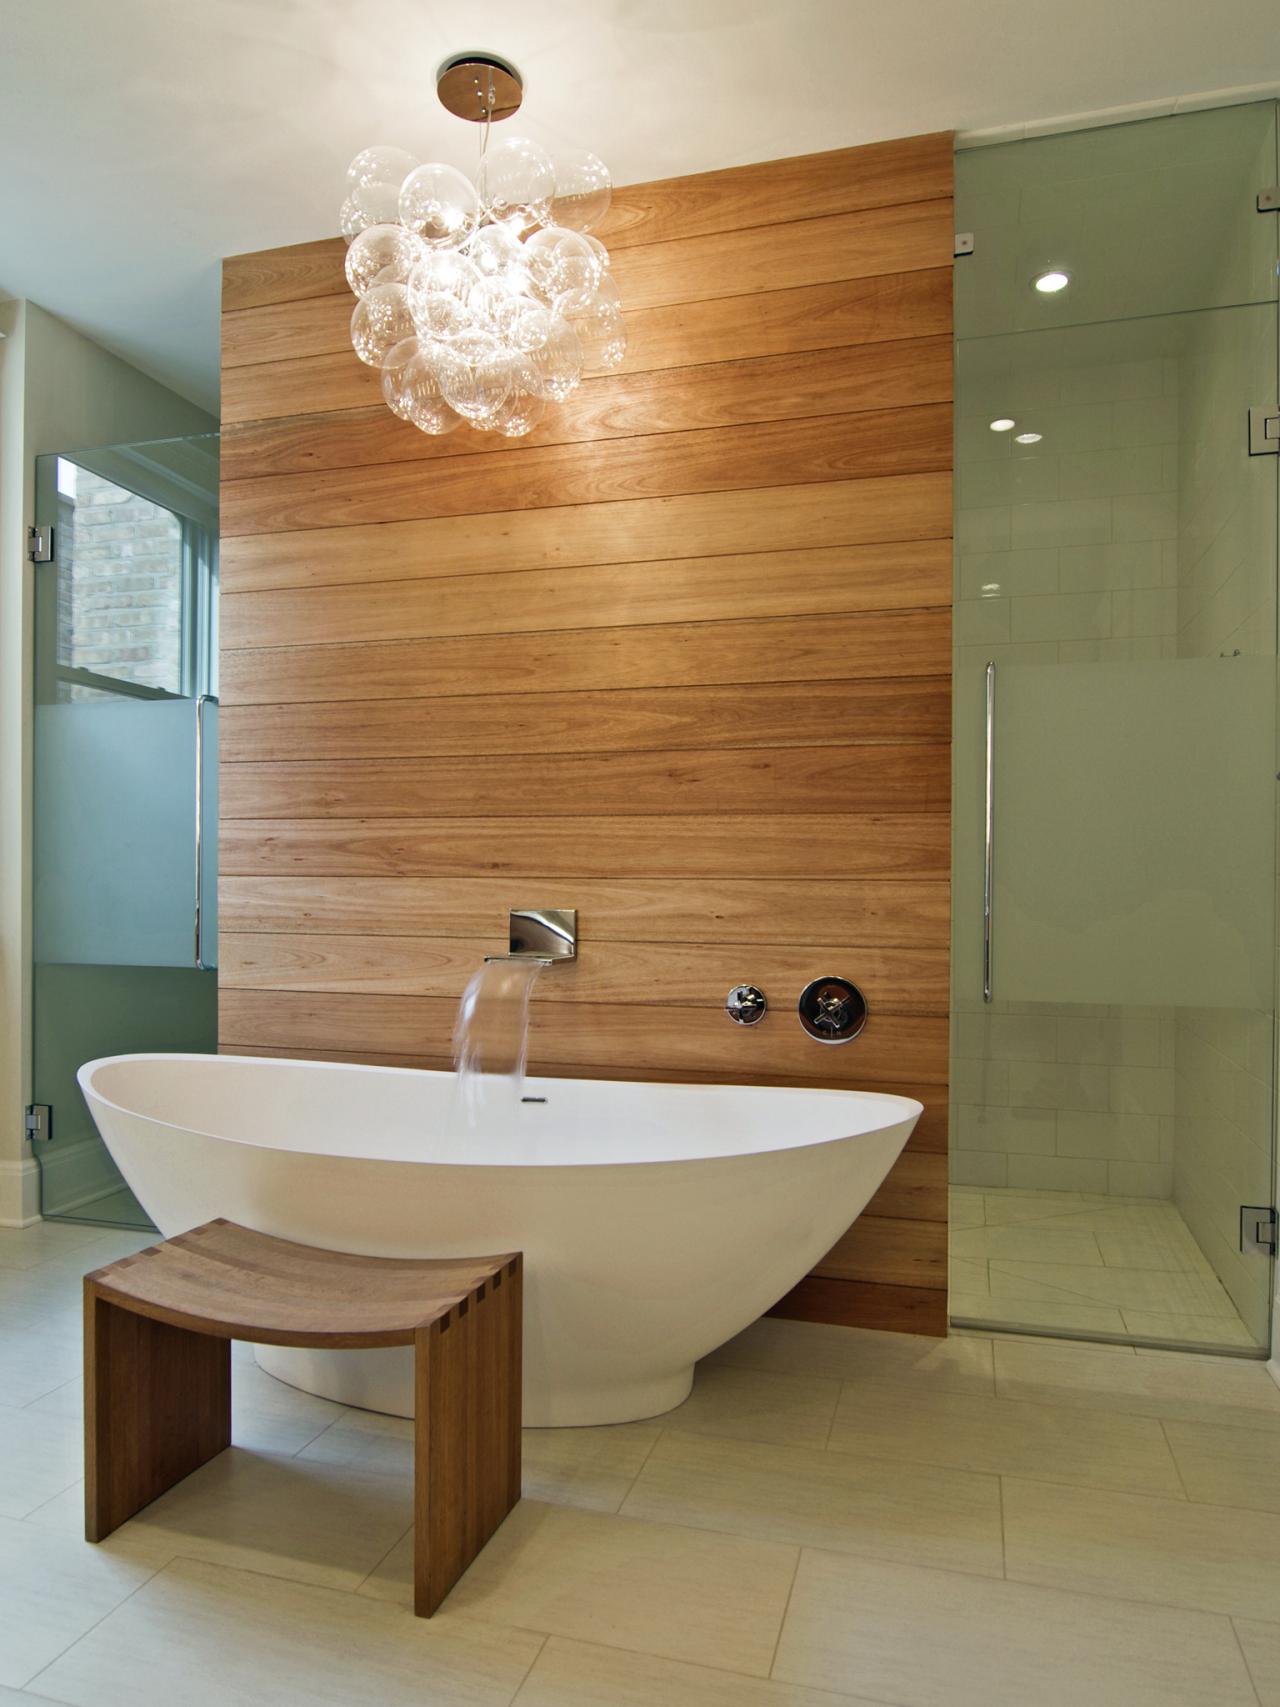 objet design lampe originale salle de bain organique steve et susan besch naturel elegance